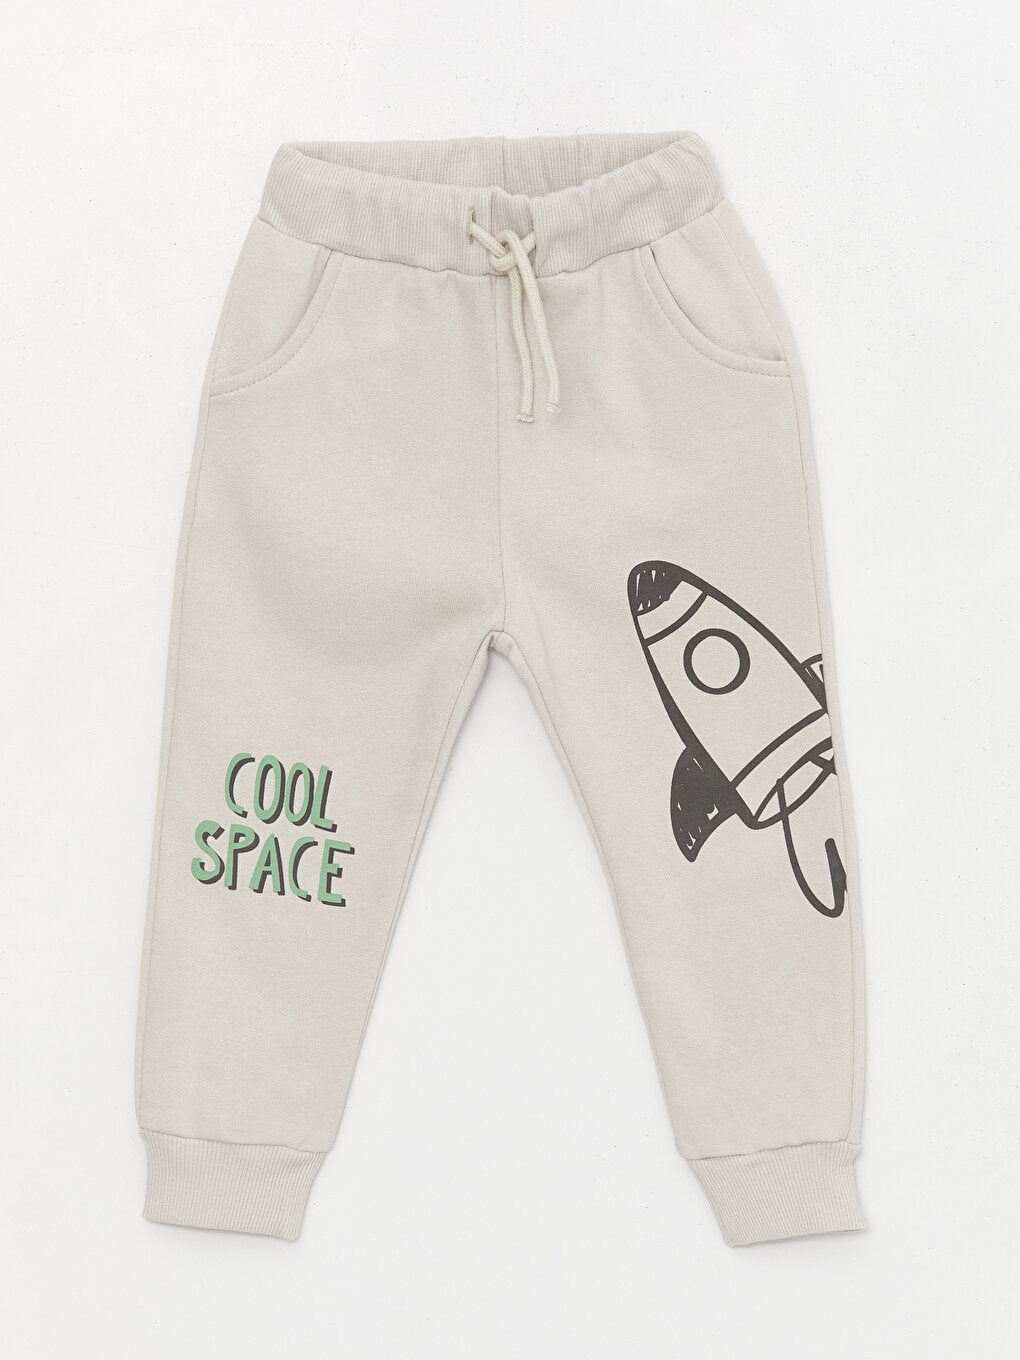 Crew Neck Long Sleeve Printed Baby Boy Sweatshirt And Sweatpants 2-Piece Set